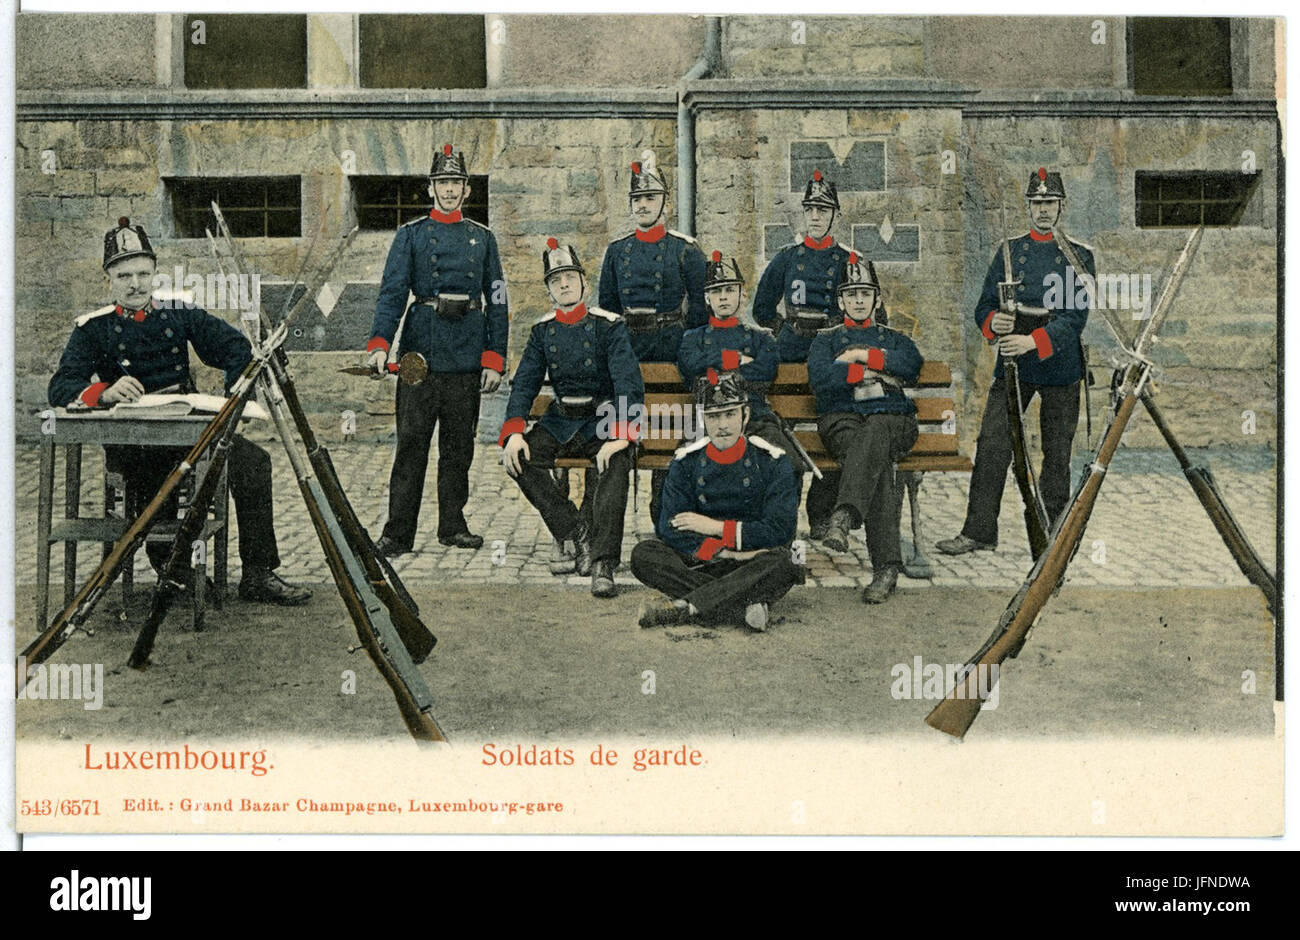 06571-Luxemburgo-1905-Soldats de garde-Brück & Sohn Kunstverlag Foto de stock